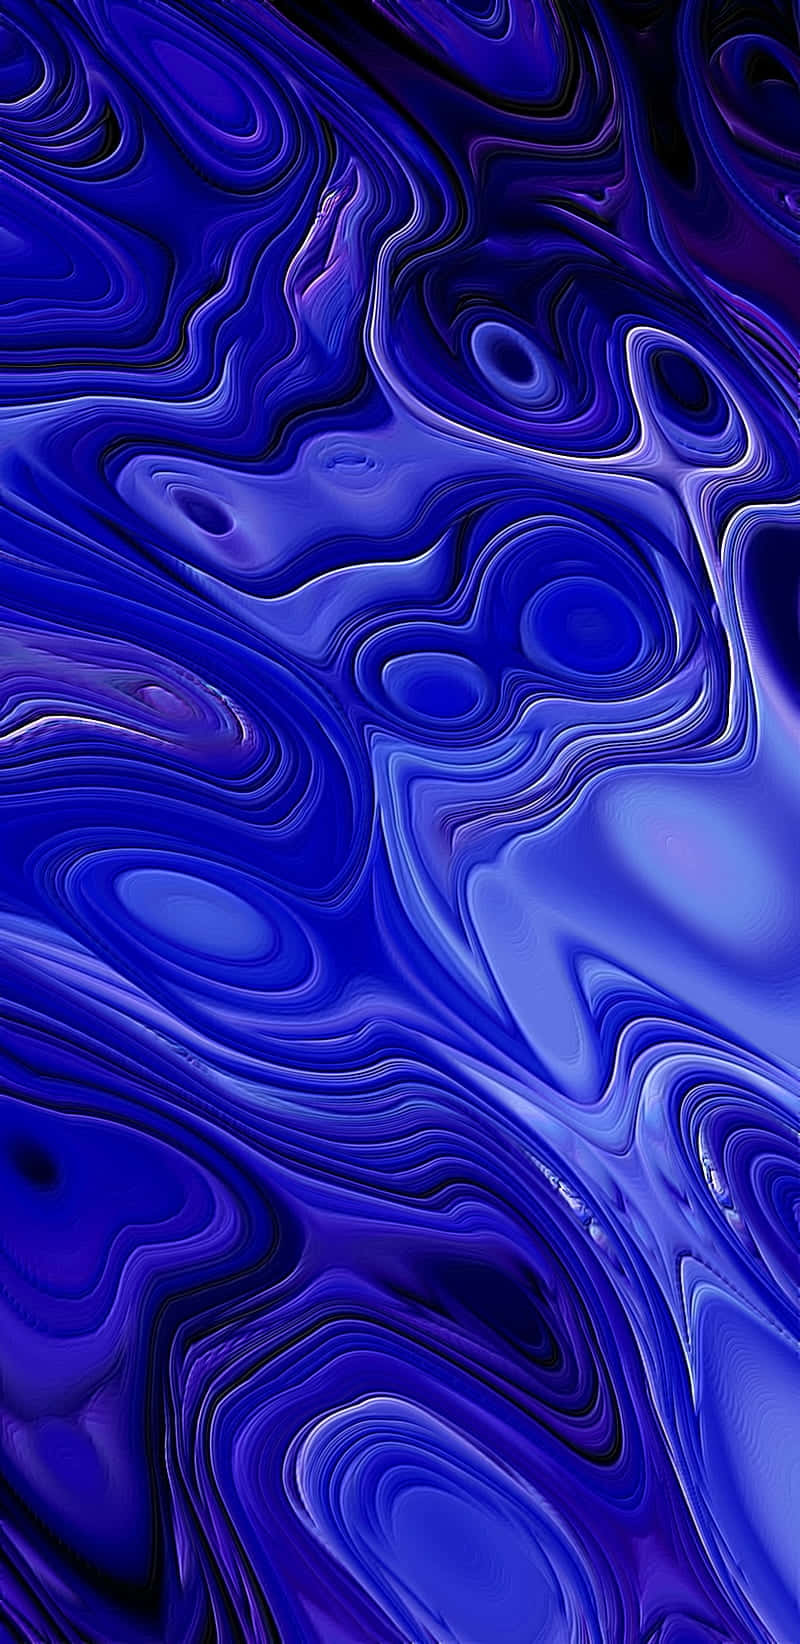 Blue Liquid Swirls Abstract Wallpaper